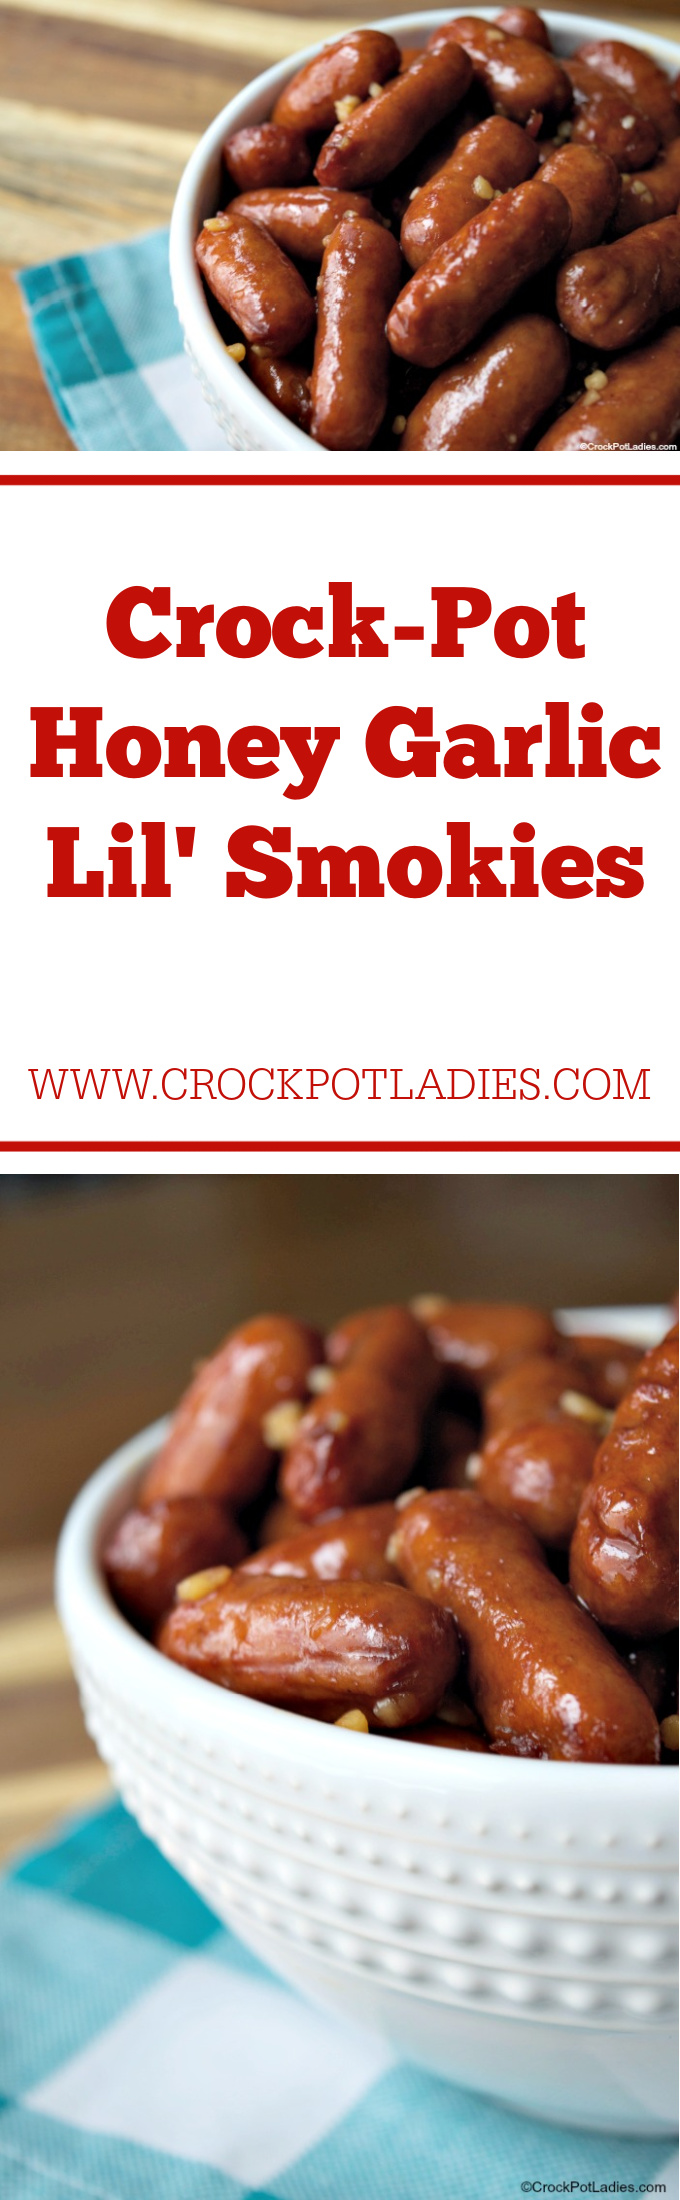 Crock-Pot Honey Garlic Lil' Smokies Recipe